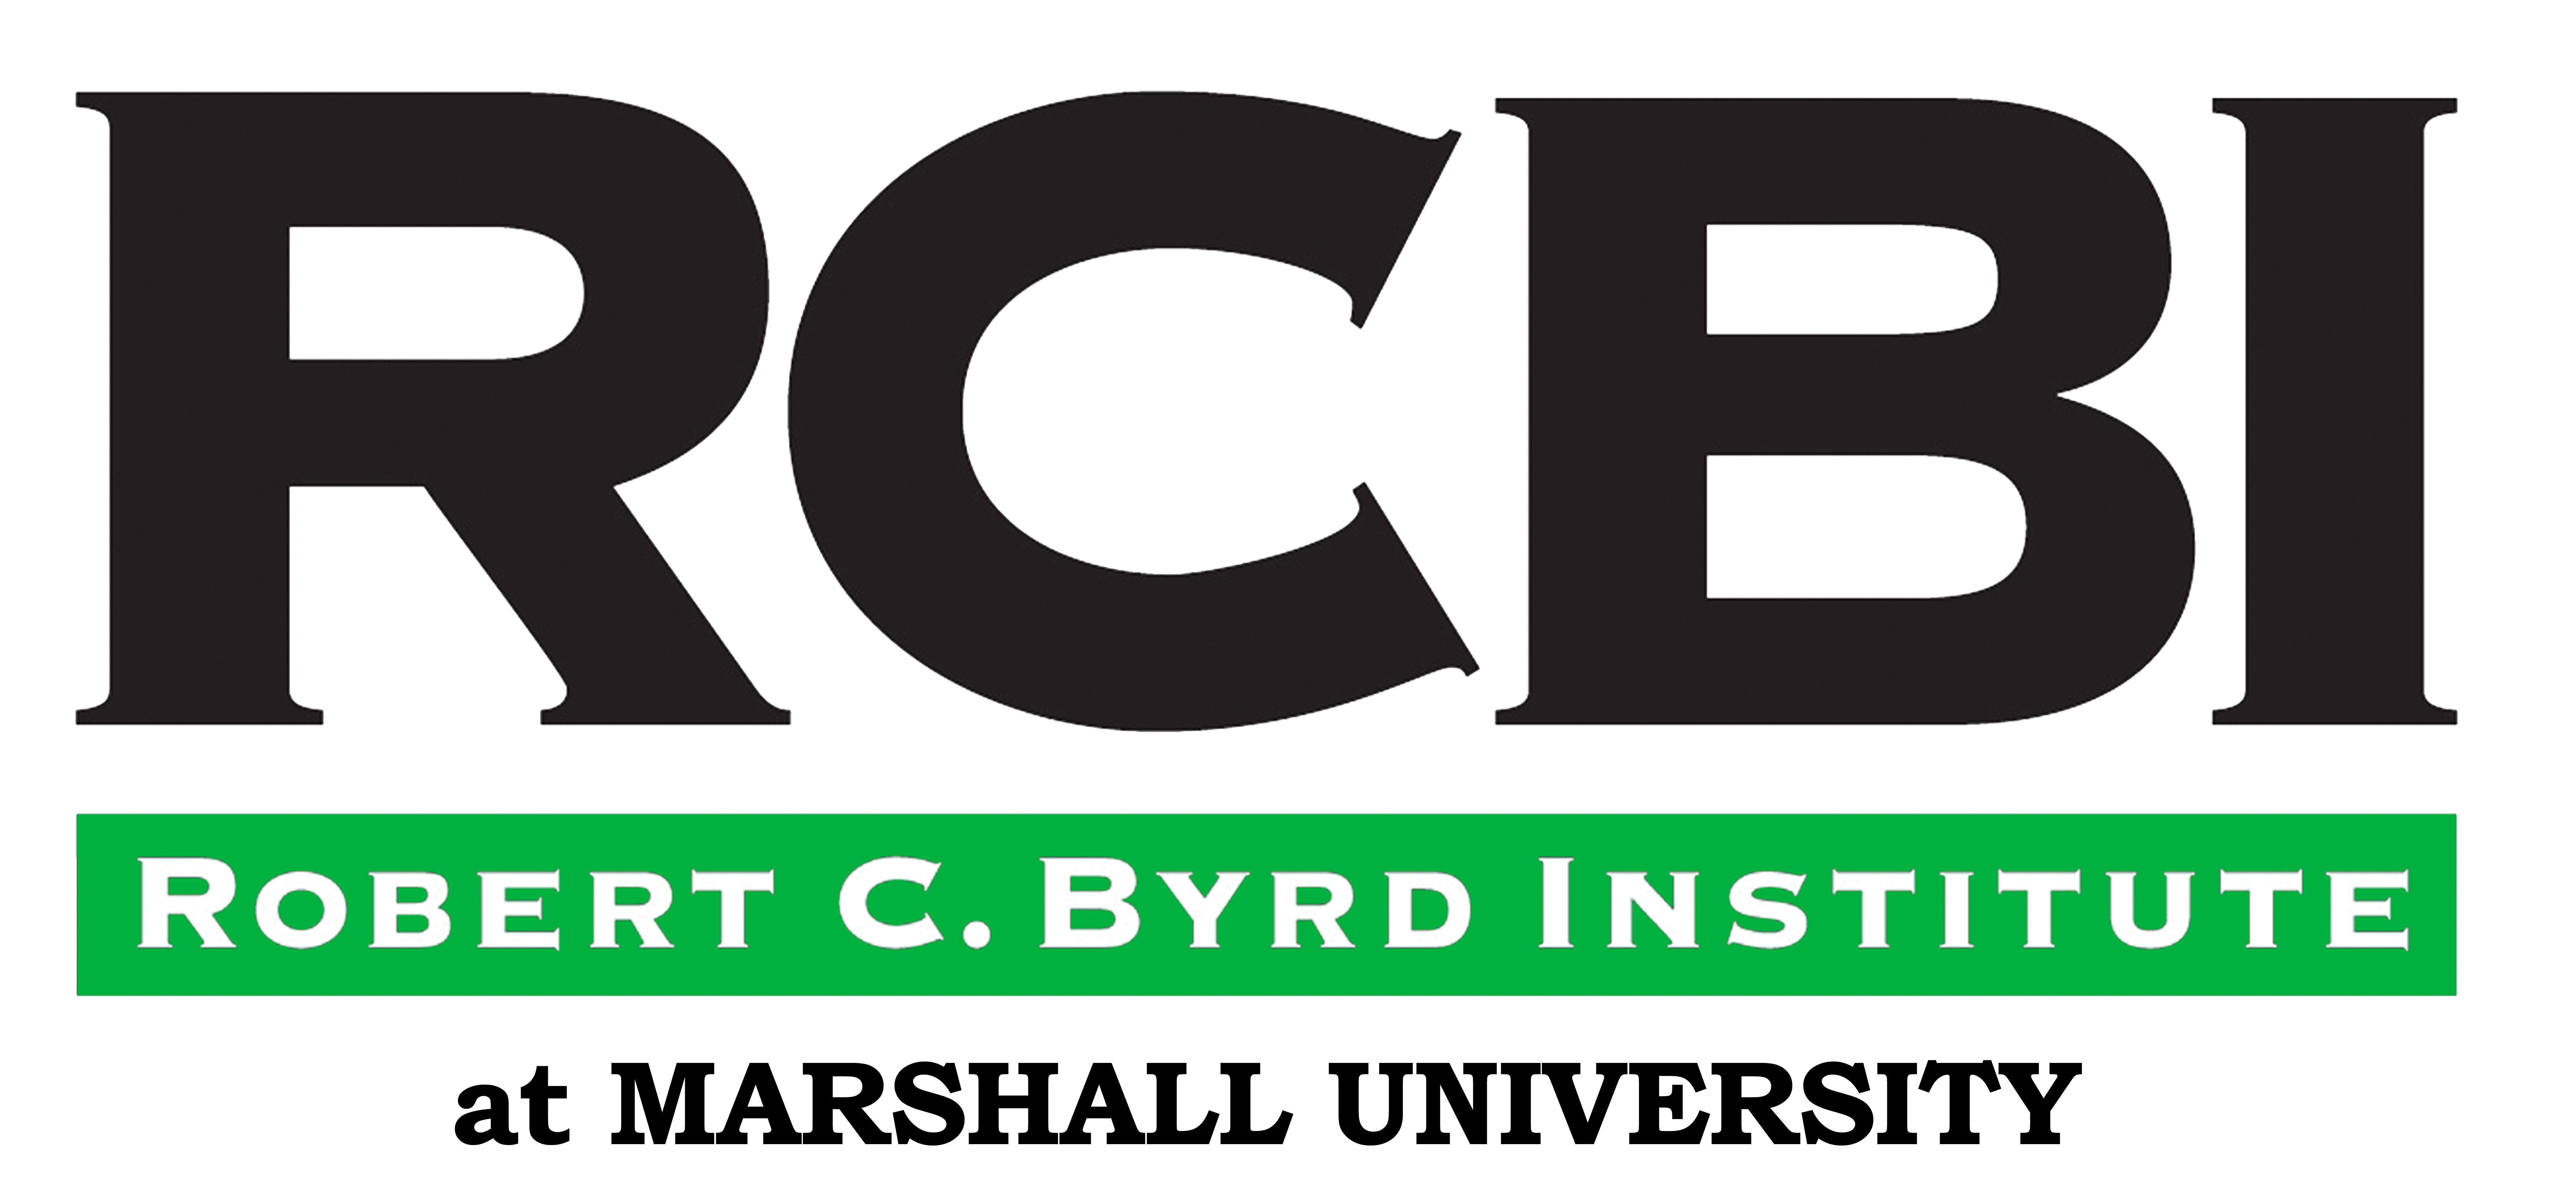 RCBI at Marshall University